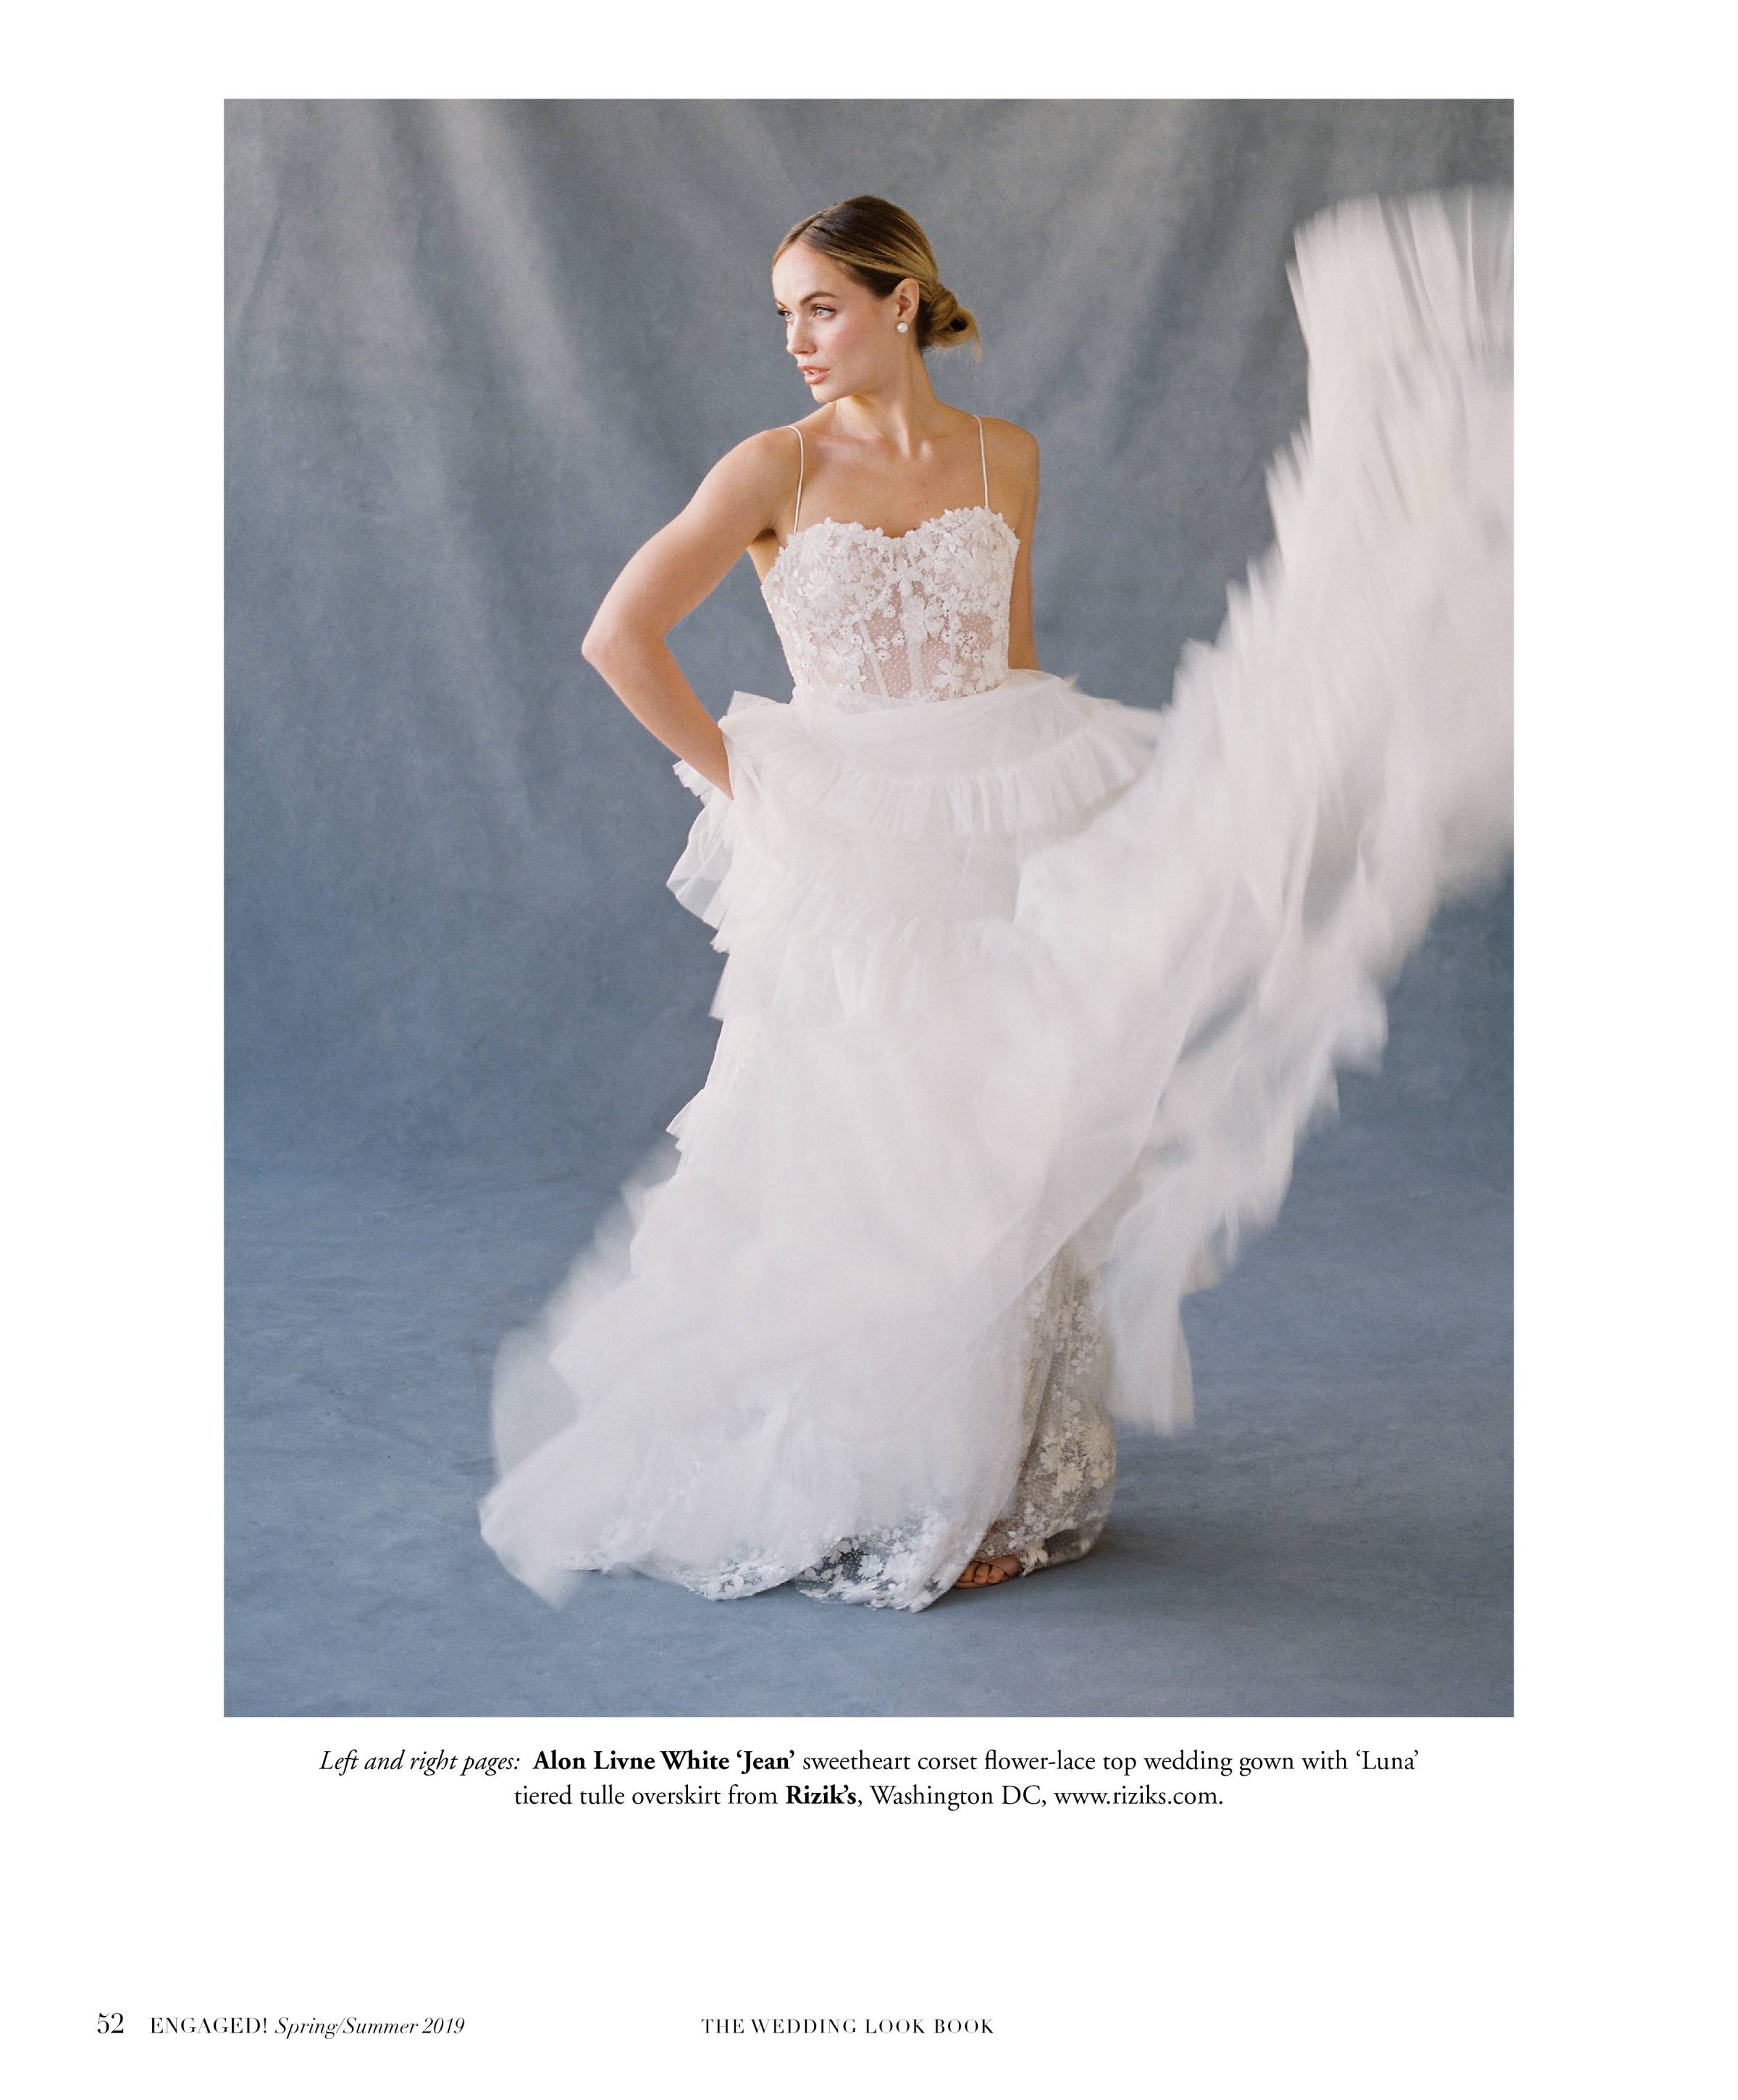 Alon Livne White wedding gown from Riziks